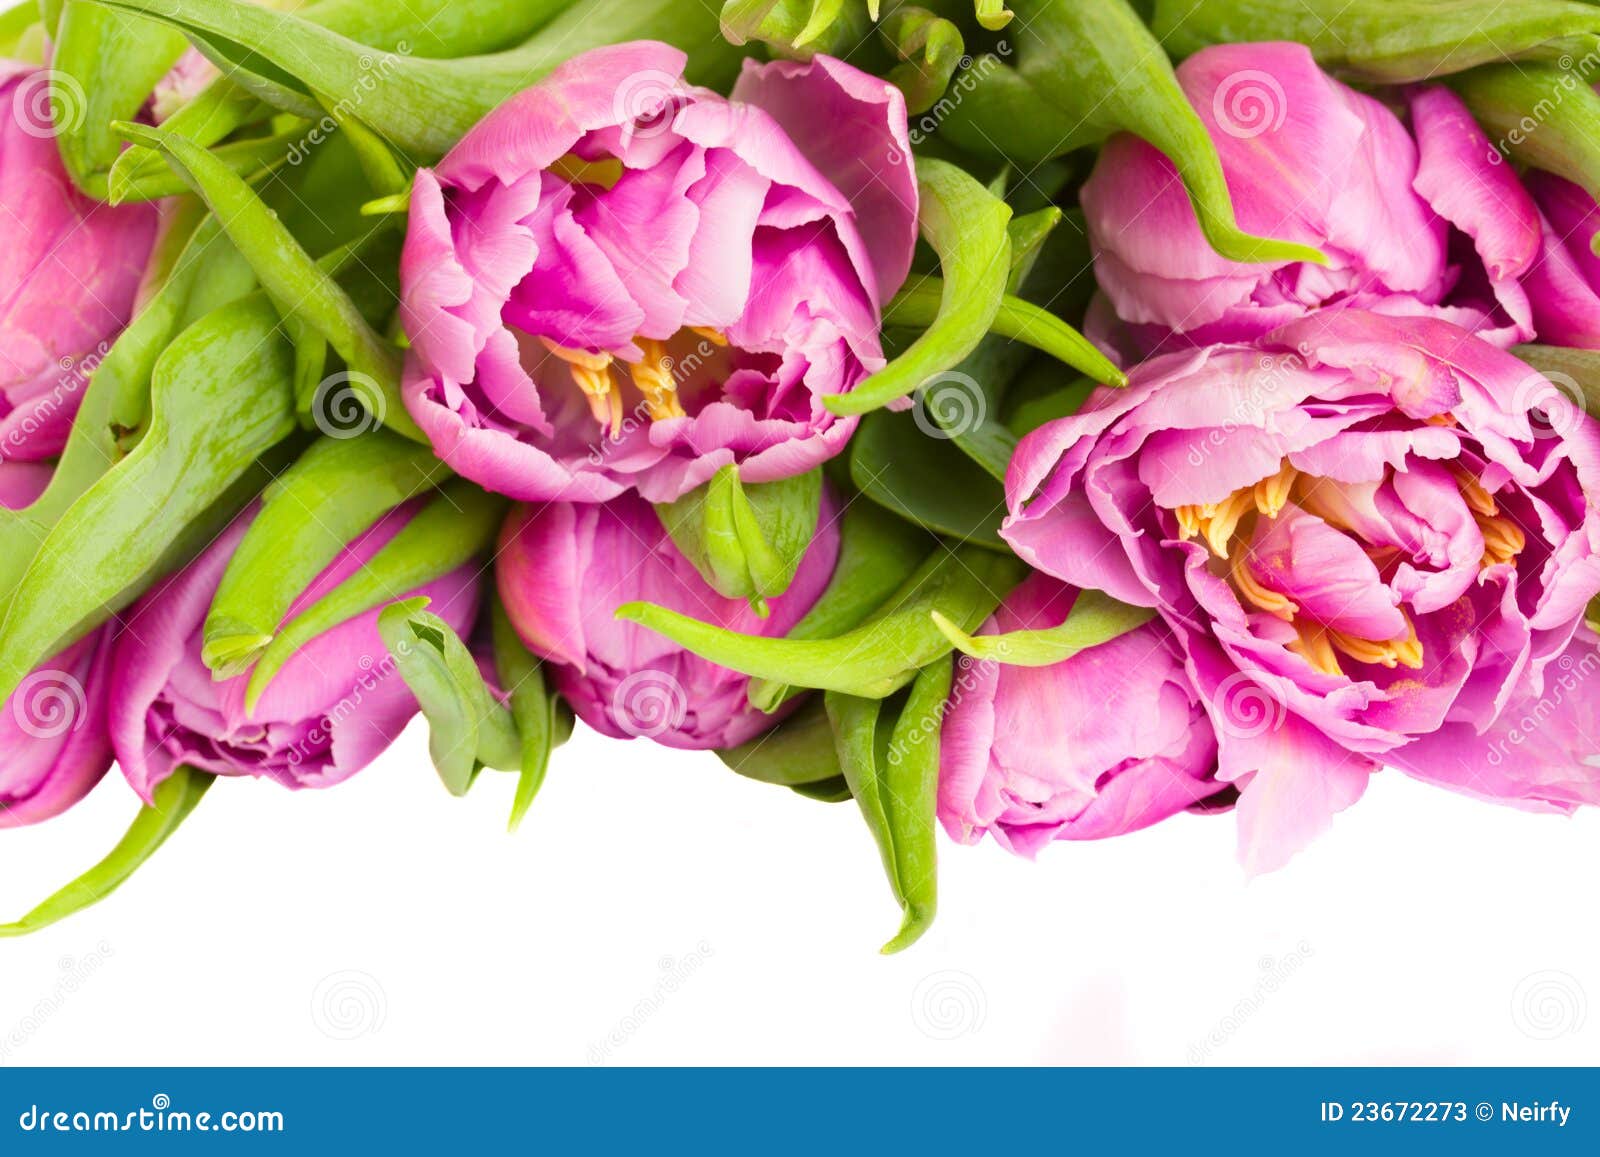 Purple Tulips Border Stock Photos - Image: 23672273